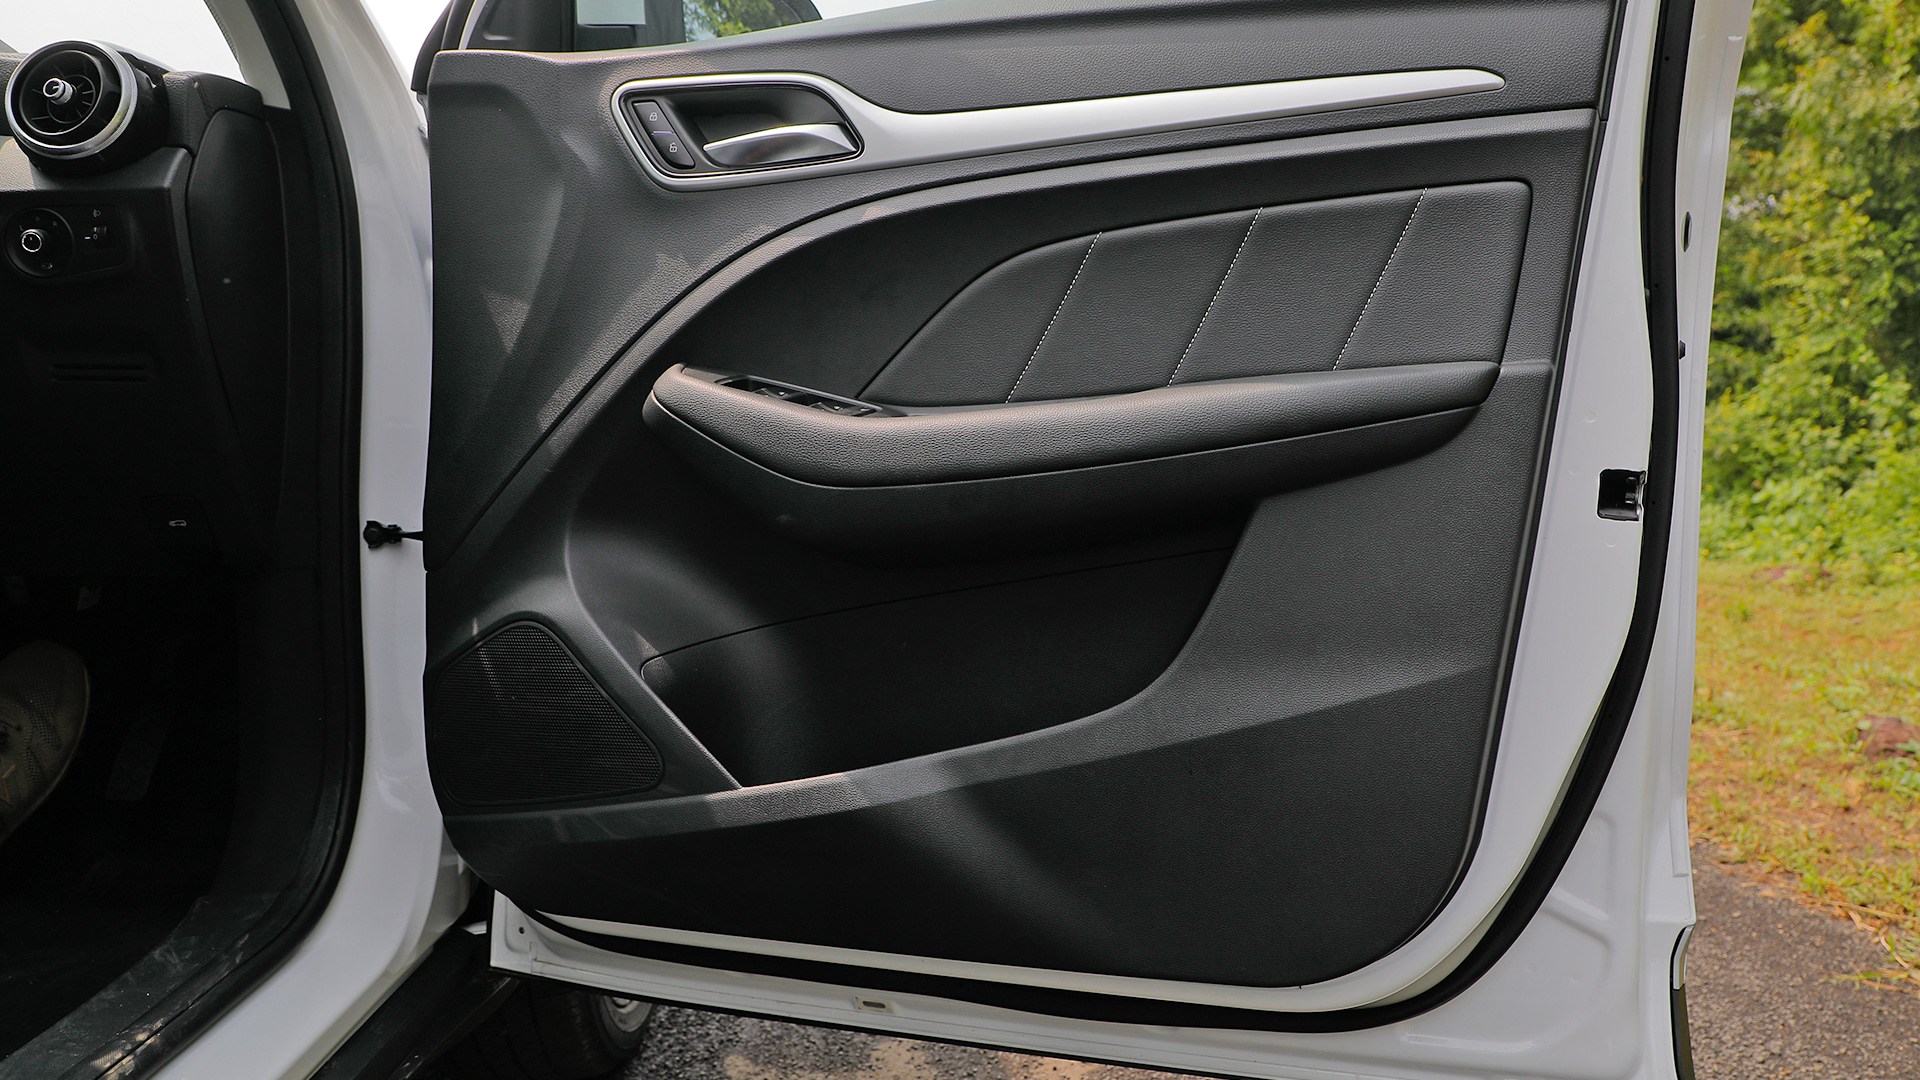 MG ZS EV 2019 STD Interior Car Photos - Overdrive